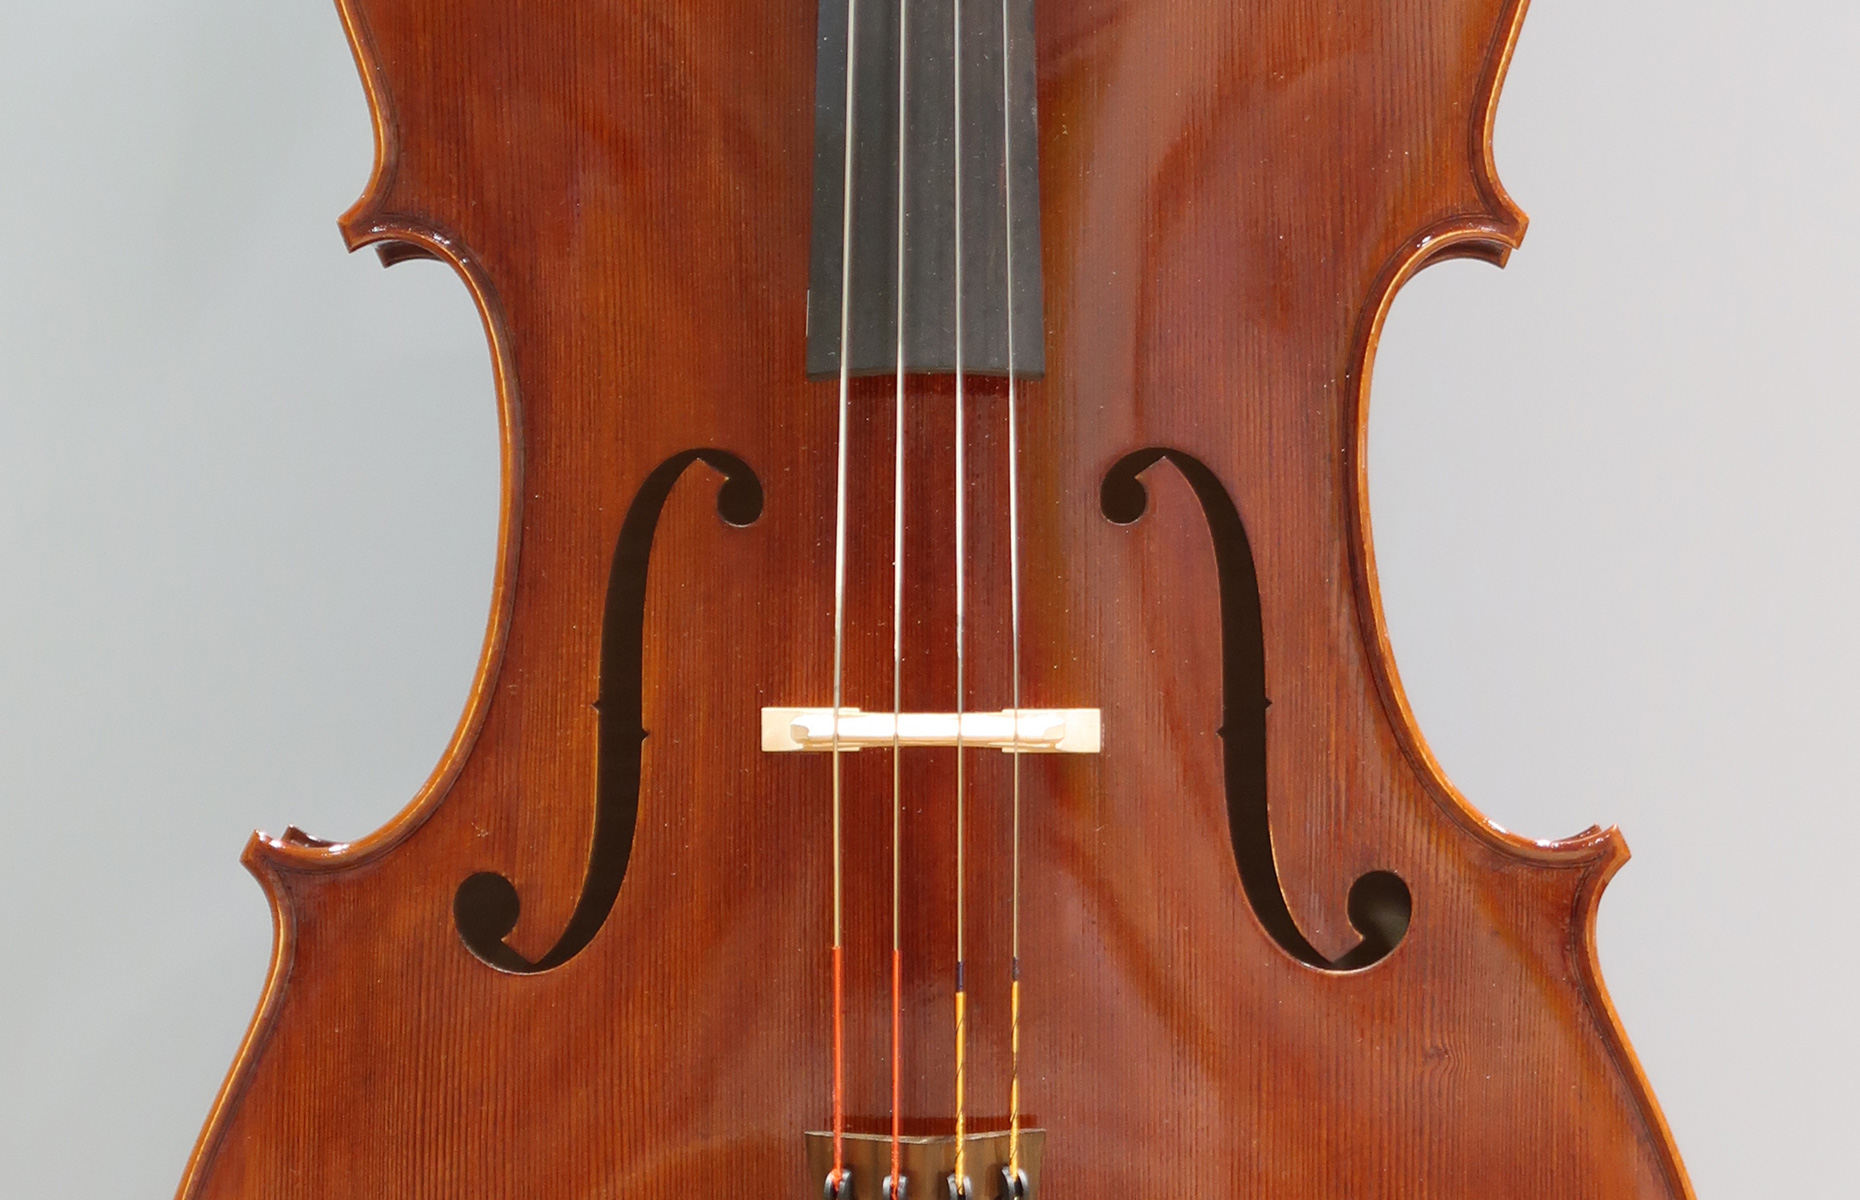 Cello Rainer W. Leonhardt No.32 Germany ”Der Herbstwind” - 名古屋の弦楽器専門店 KAEDE  STRINGS | バイオリン・ビオラ・チェロ・弓の販売